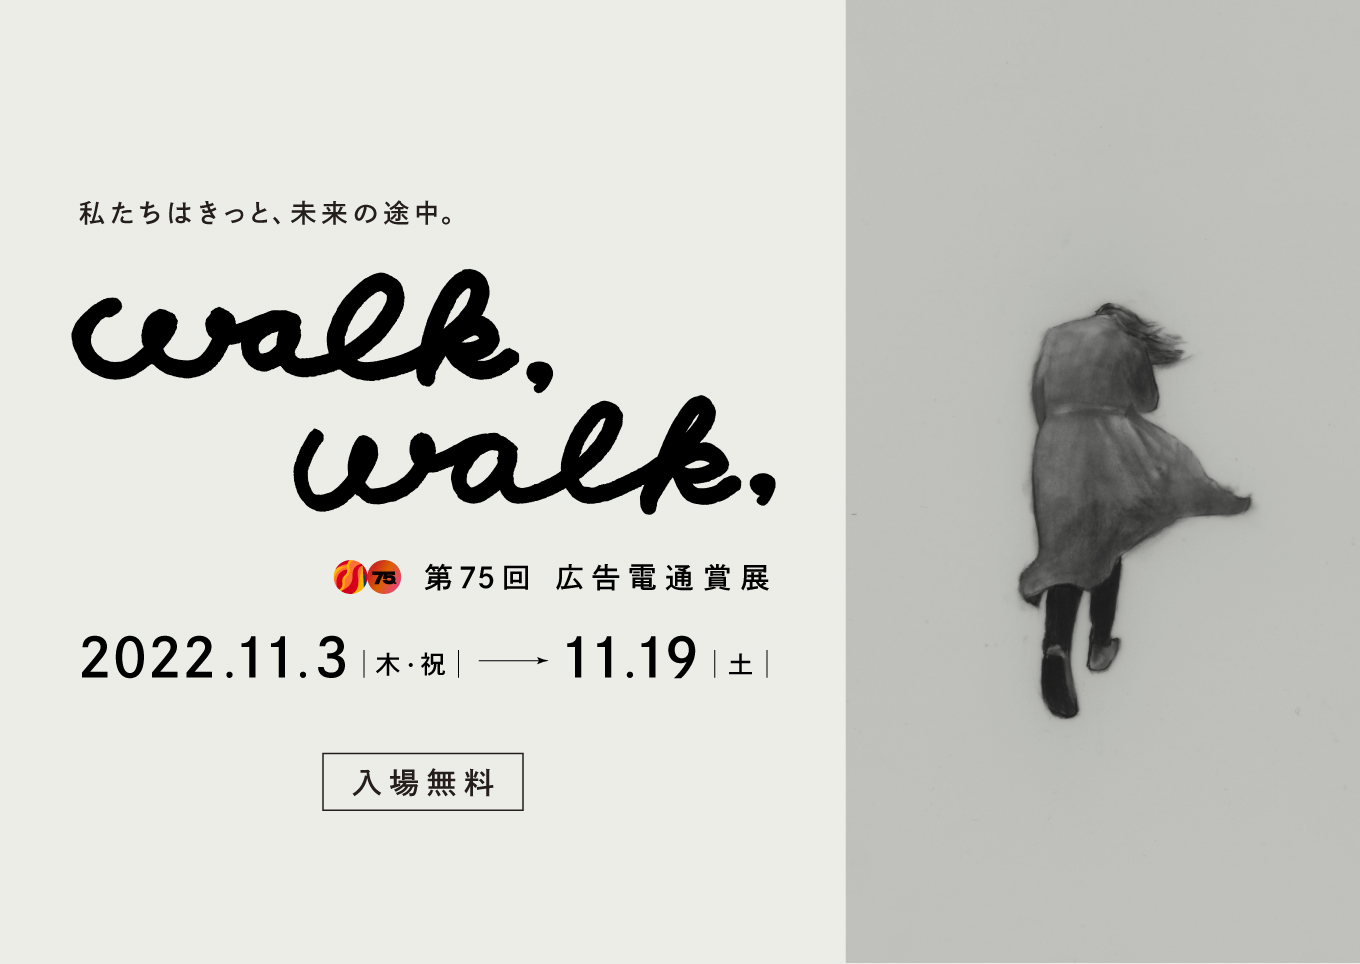 「walk,walk, 第75回広告電通賞展」